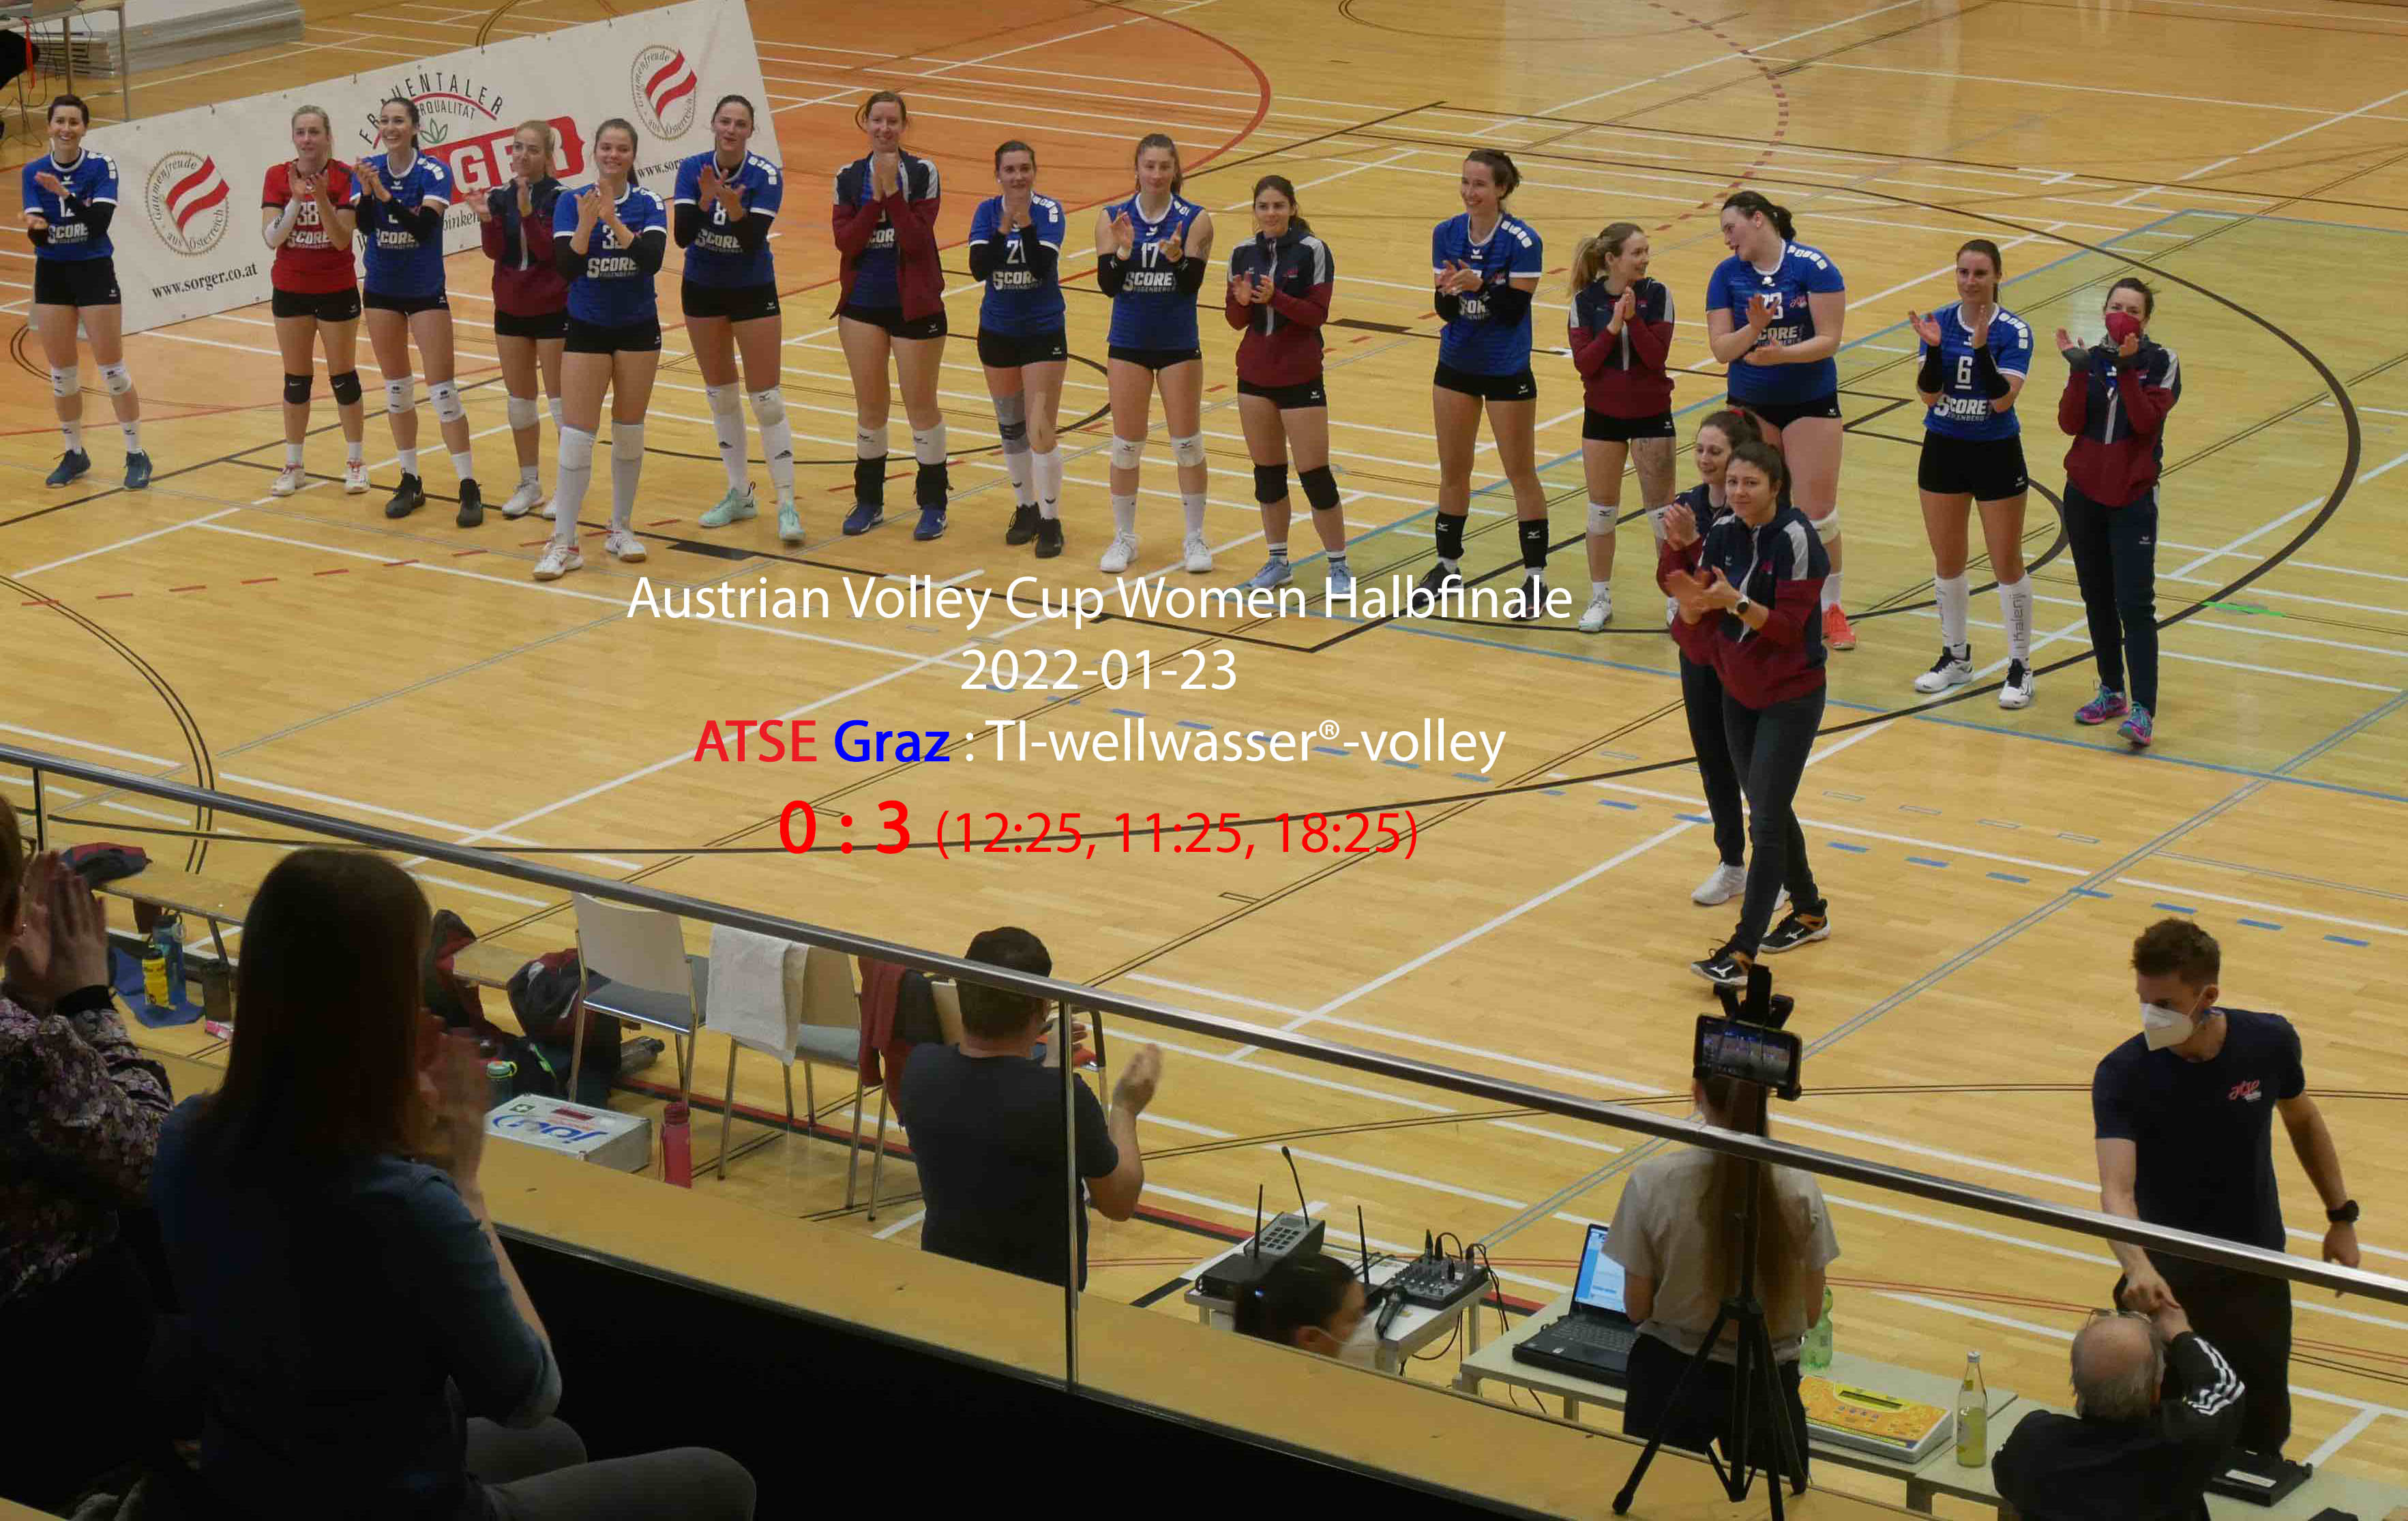 Austrian Volley Cup Halbfinale ATSE Graz :TI-wellwasser®-volley